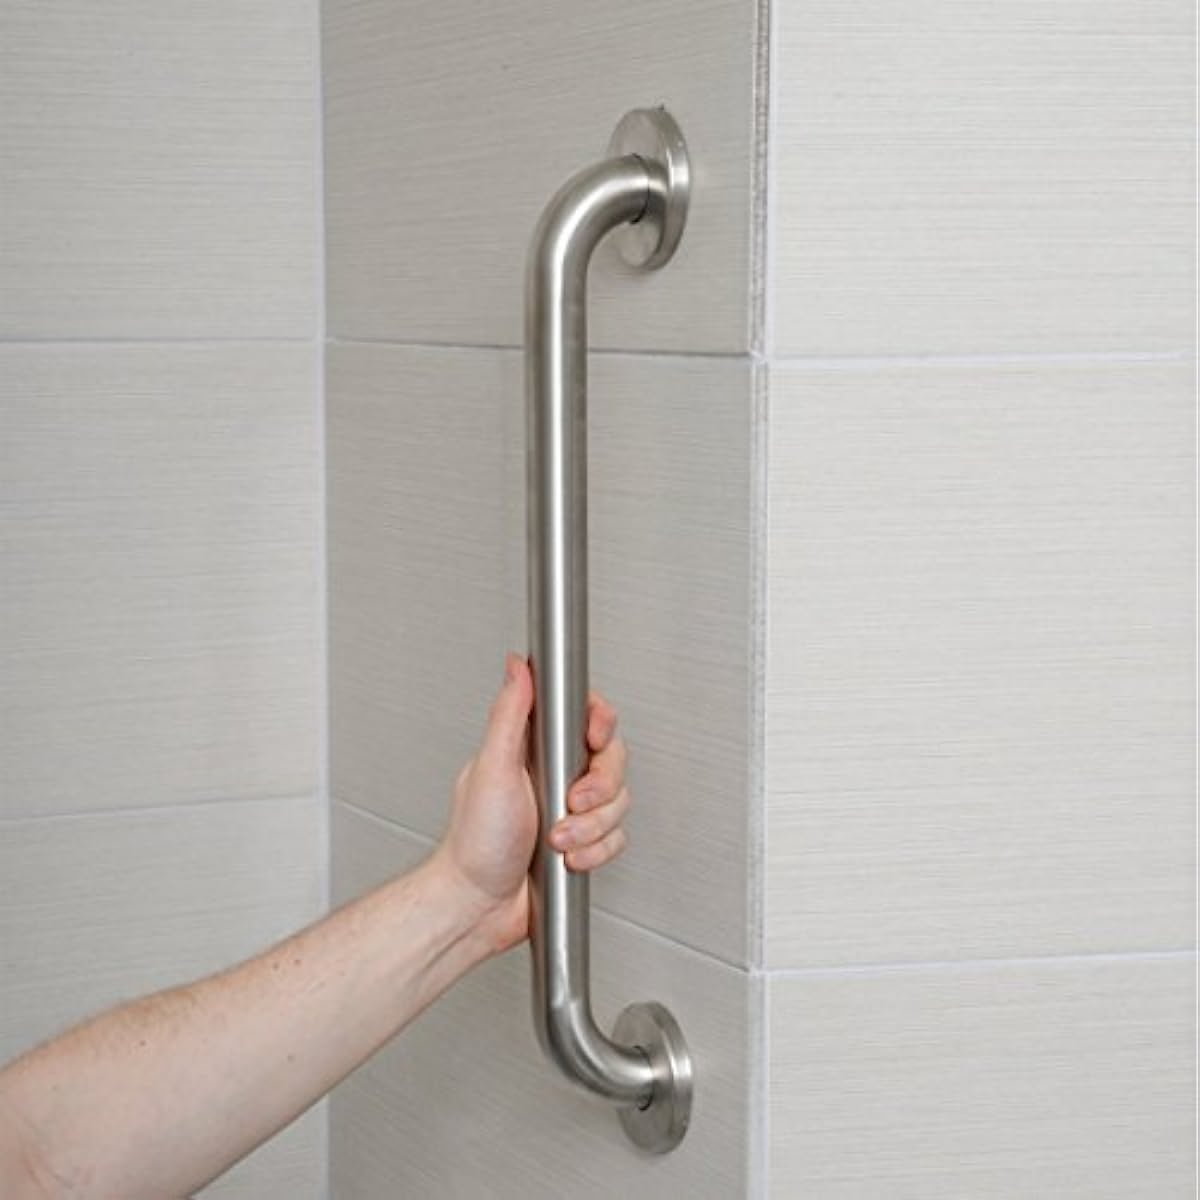 Amazon Basics Bathroom Handicap Safety Grab Bar, 16 Inch Length, 1.25 Inch Diameter